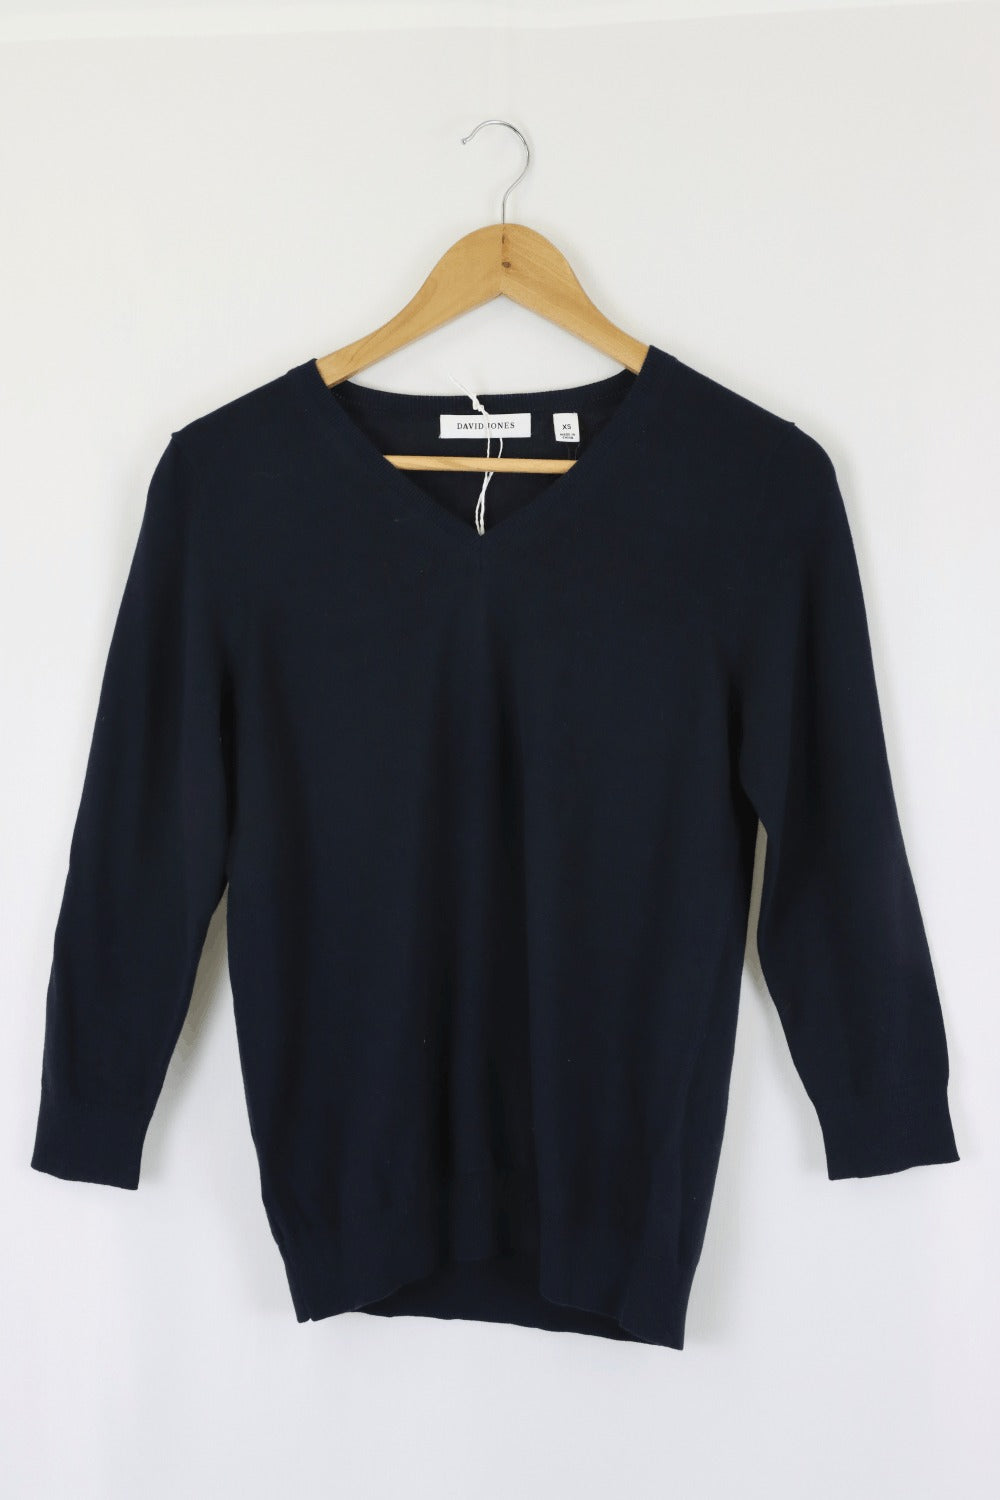 David Jones Navy Sweater XS